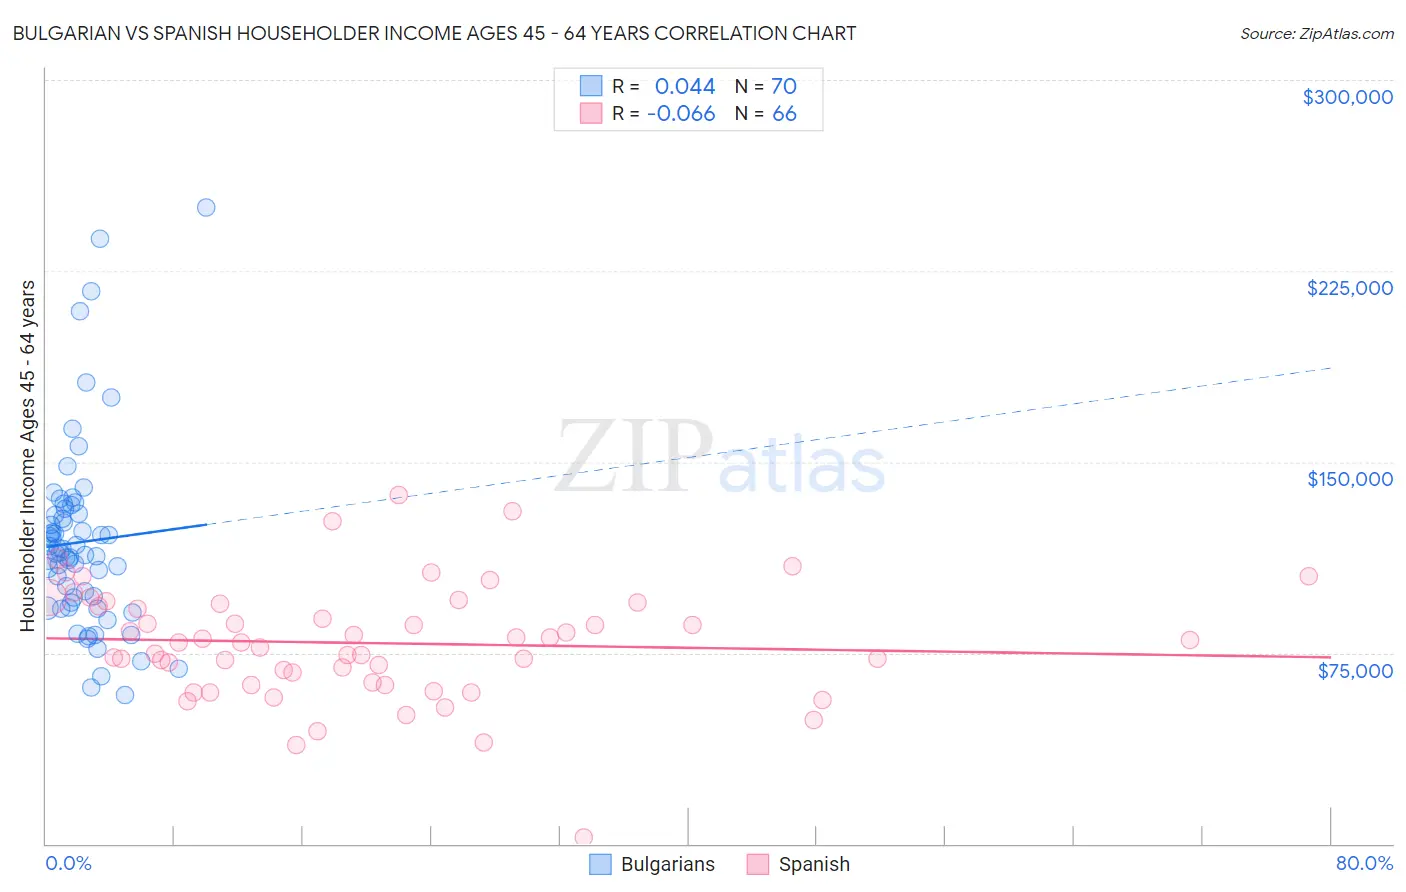 Bulgarian vs Spanish Householder Income Ages 45 - 64 years